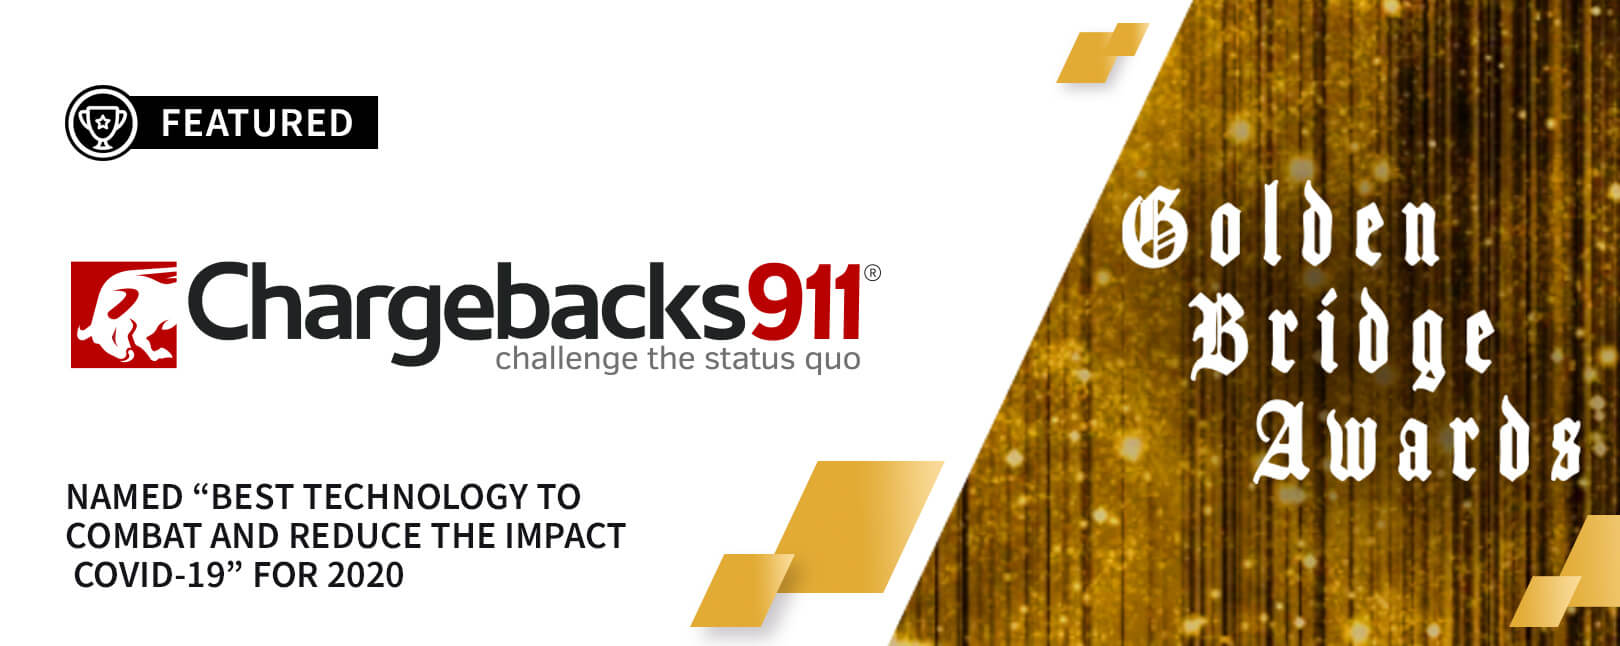 Chargebacks911® Wins “Best Technology” Award!